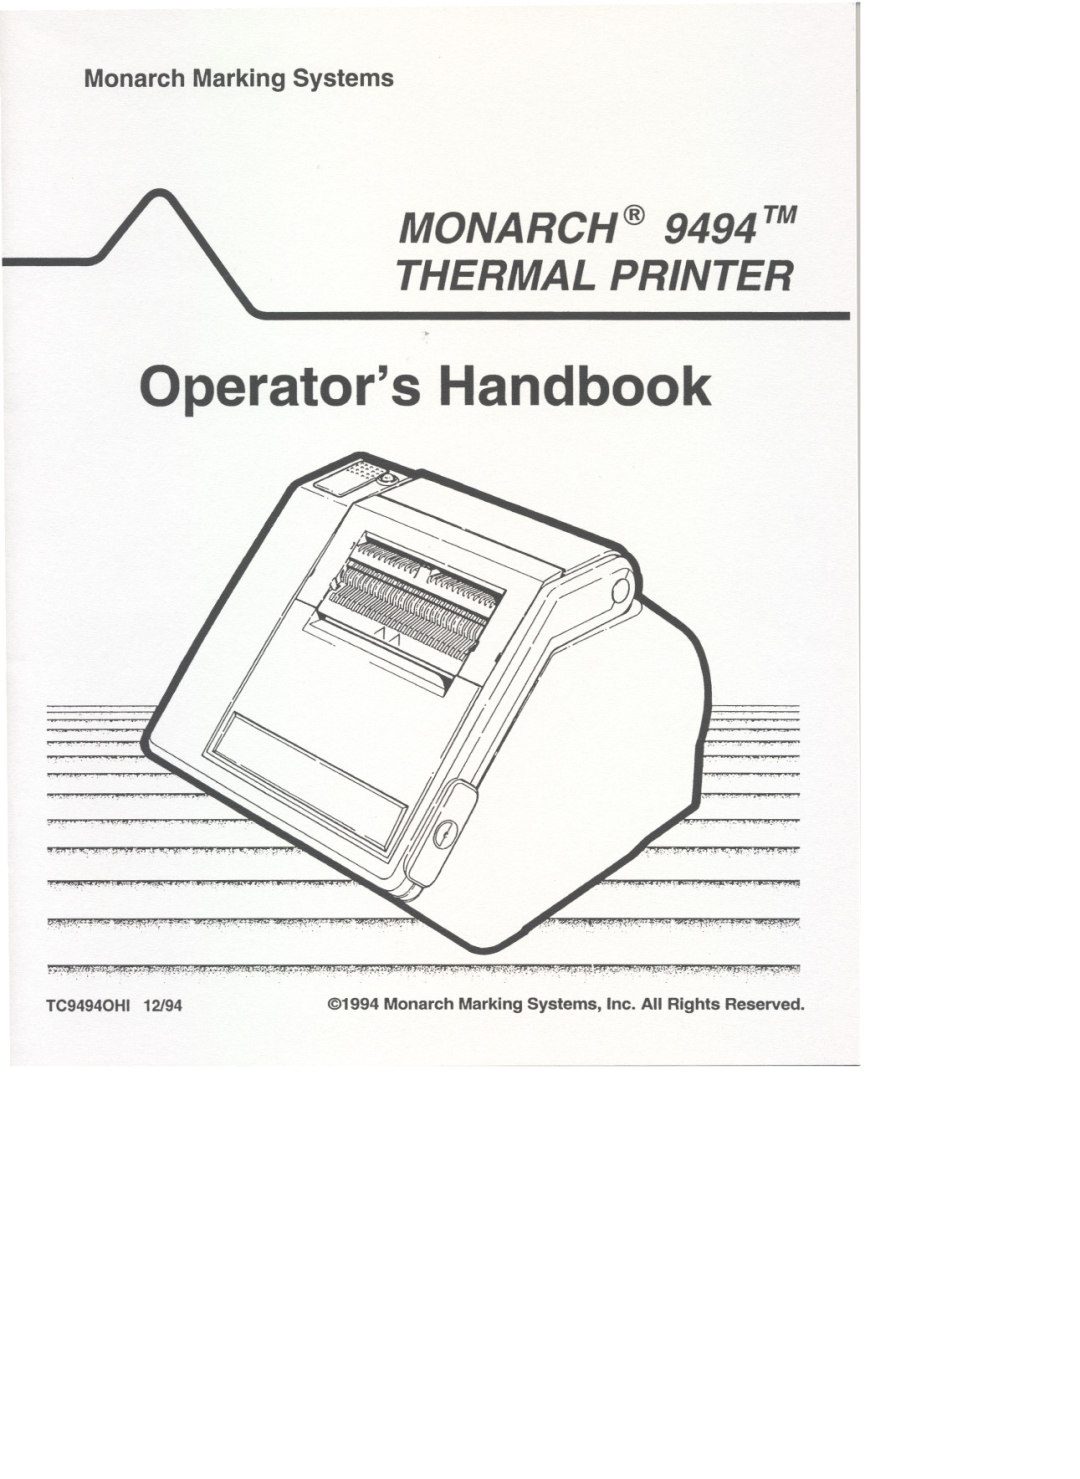 Monarch manual Operators Handbook, MONARCH@ 9494 TM THERMAL PRINTER, Monarch Marking Systems, TC94940HI 12/94, O-.,,~~ 